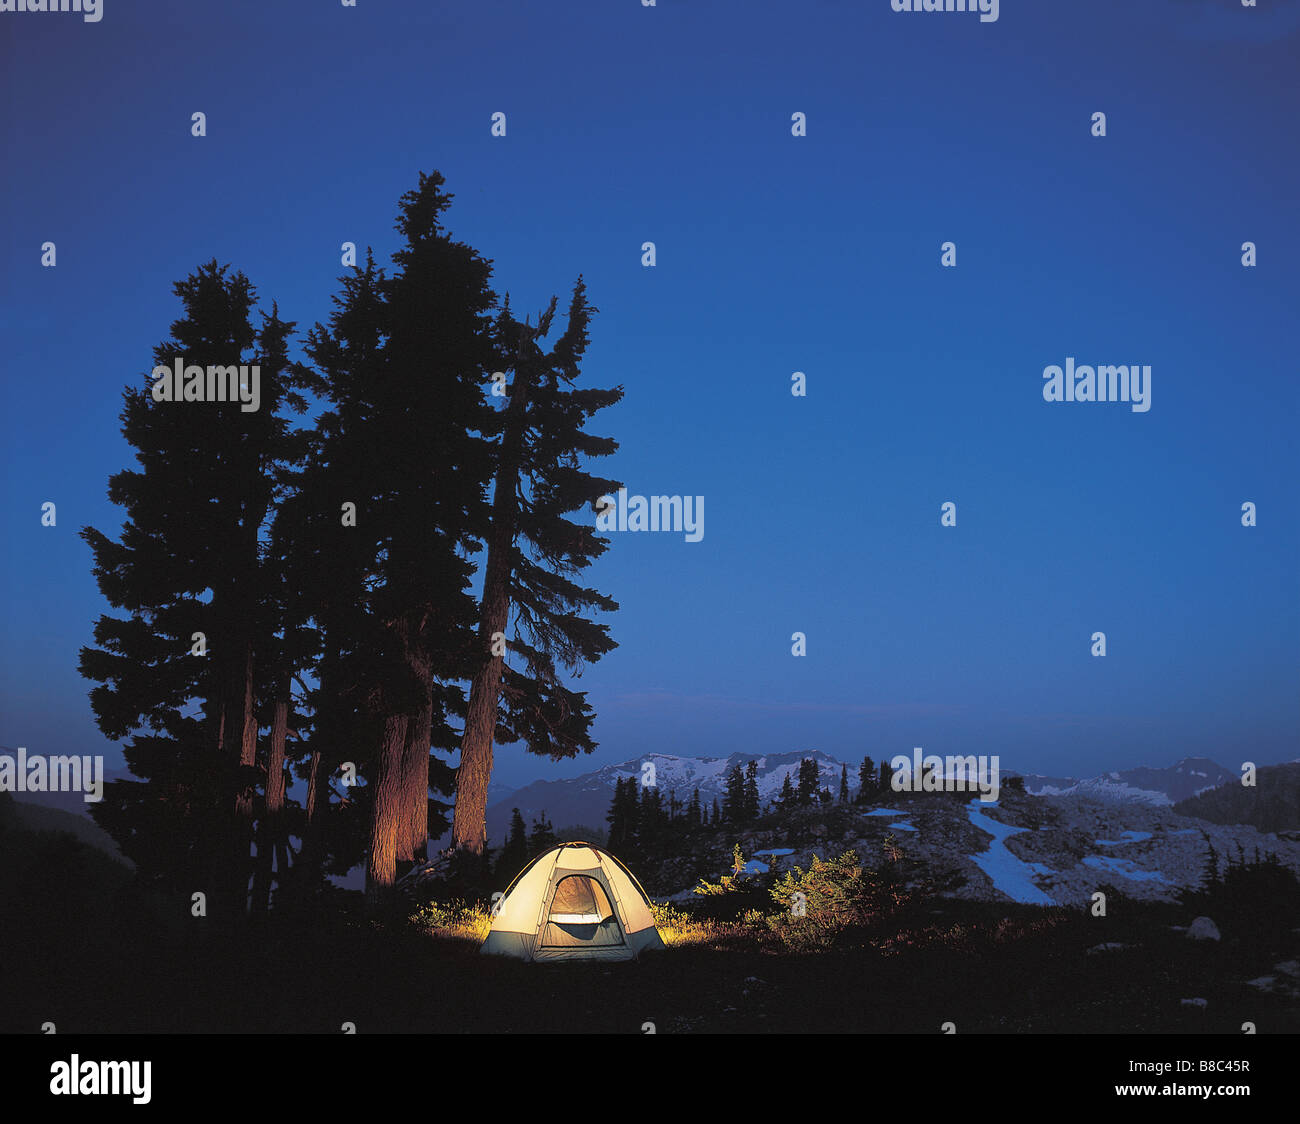 FL5491, David Nunuk; Illuminated Tent Campsite  Night, Tantalus Range, BC Stock Photo